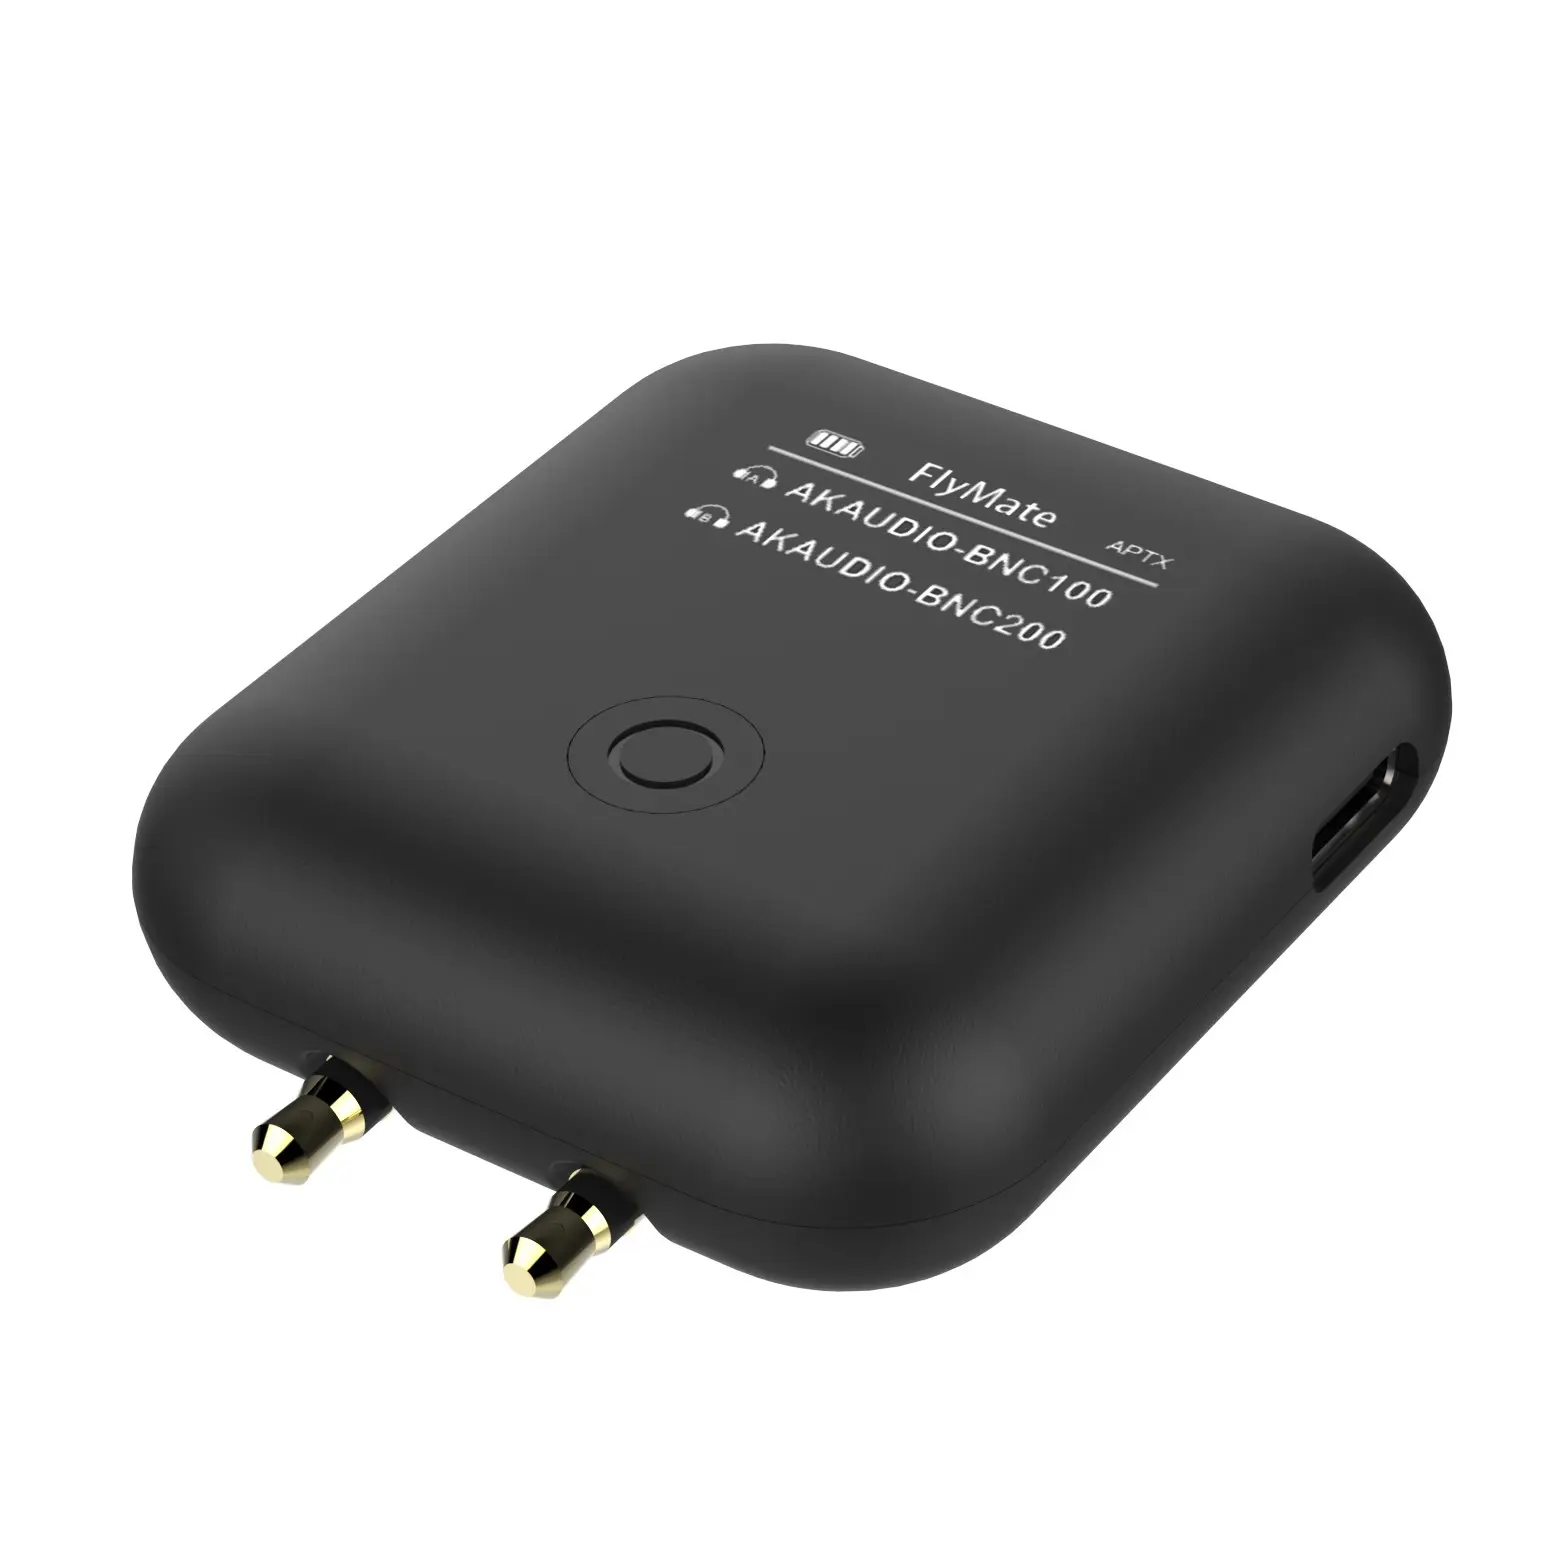 Upgraded SZ Bluetooth Transmitter with Display Long Battery Life CSR8675 aptX HD LL Portable 3.5mm Aero Plug for Plane Streaming